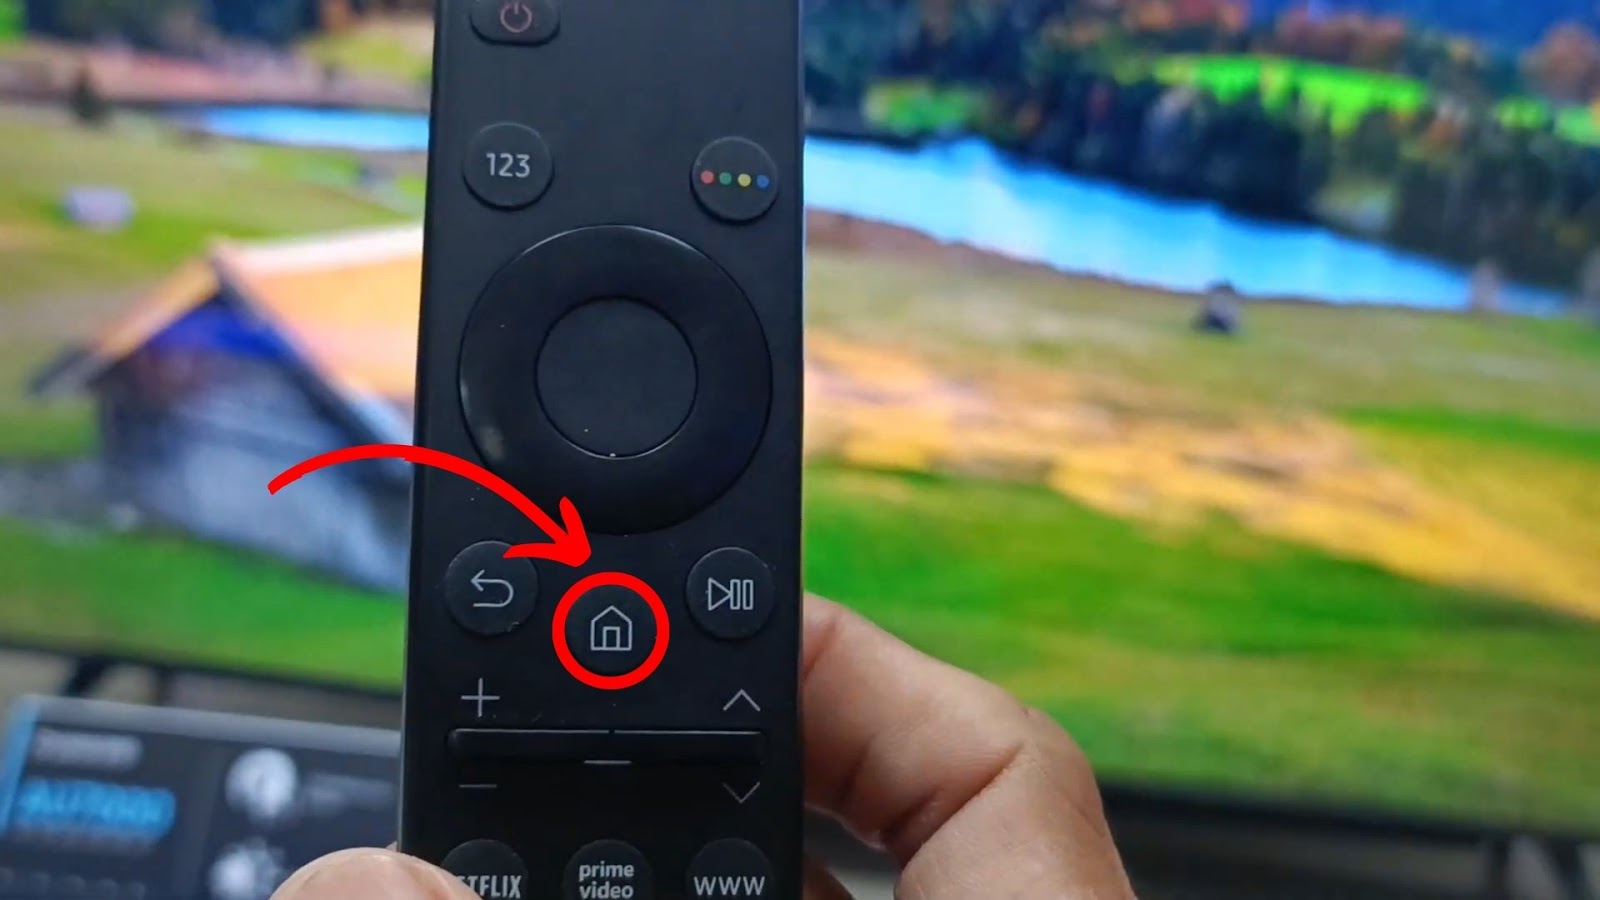 Samsung TV Remote Home Button